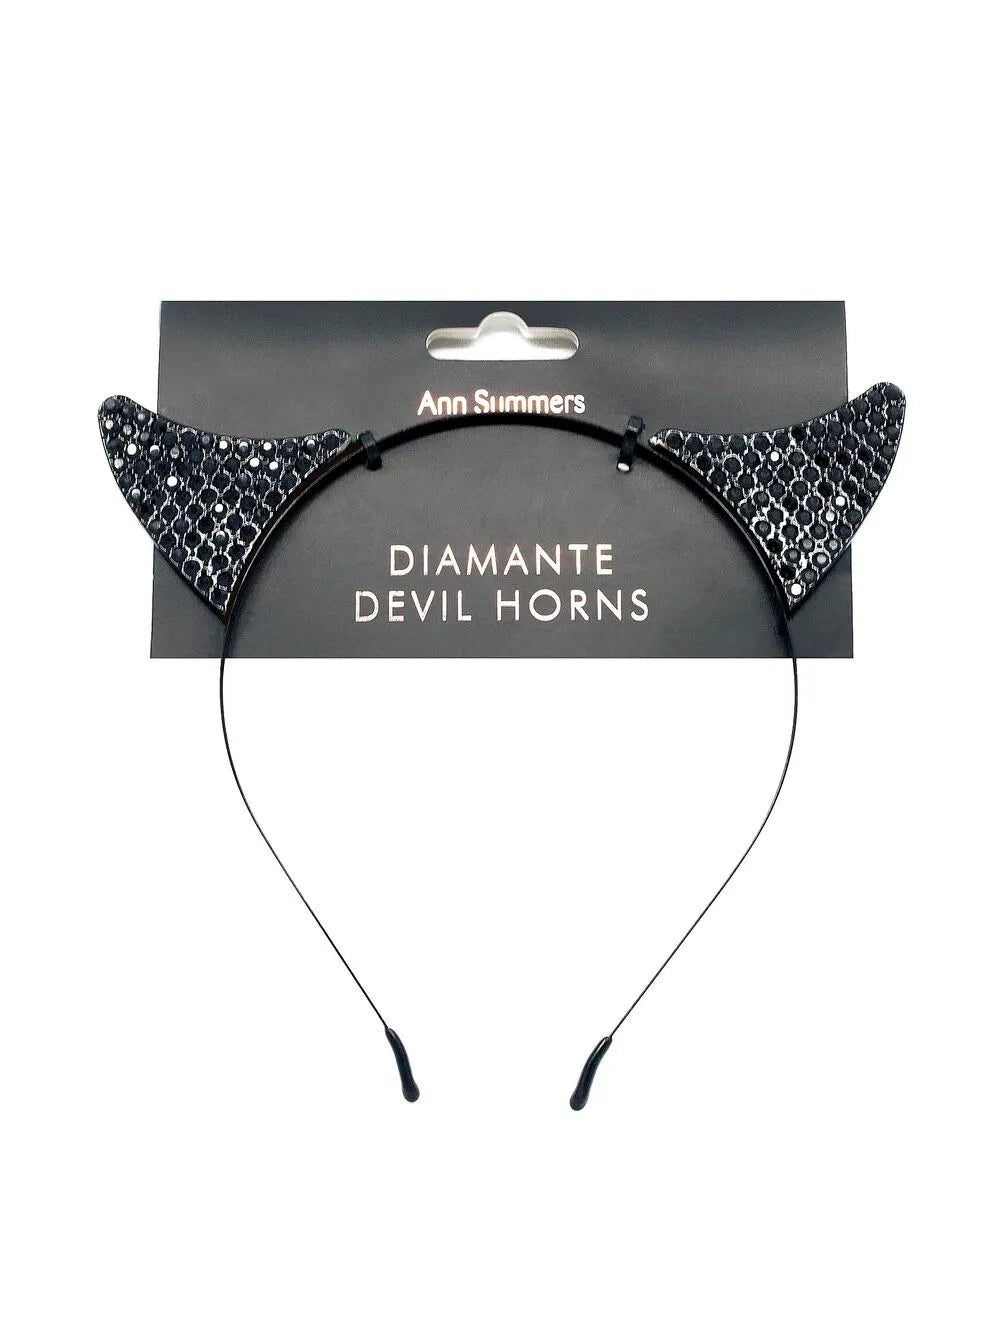 Headband with Diamante Black Devil Horns